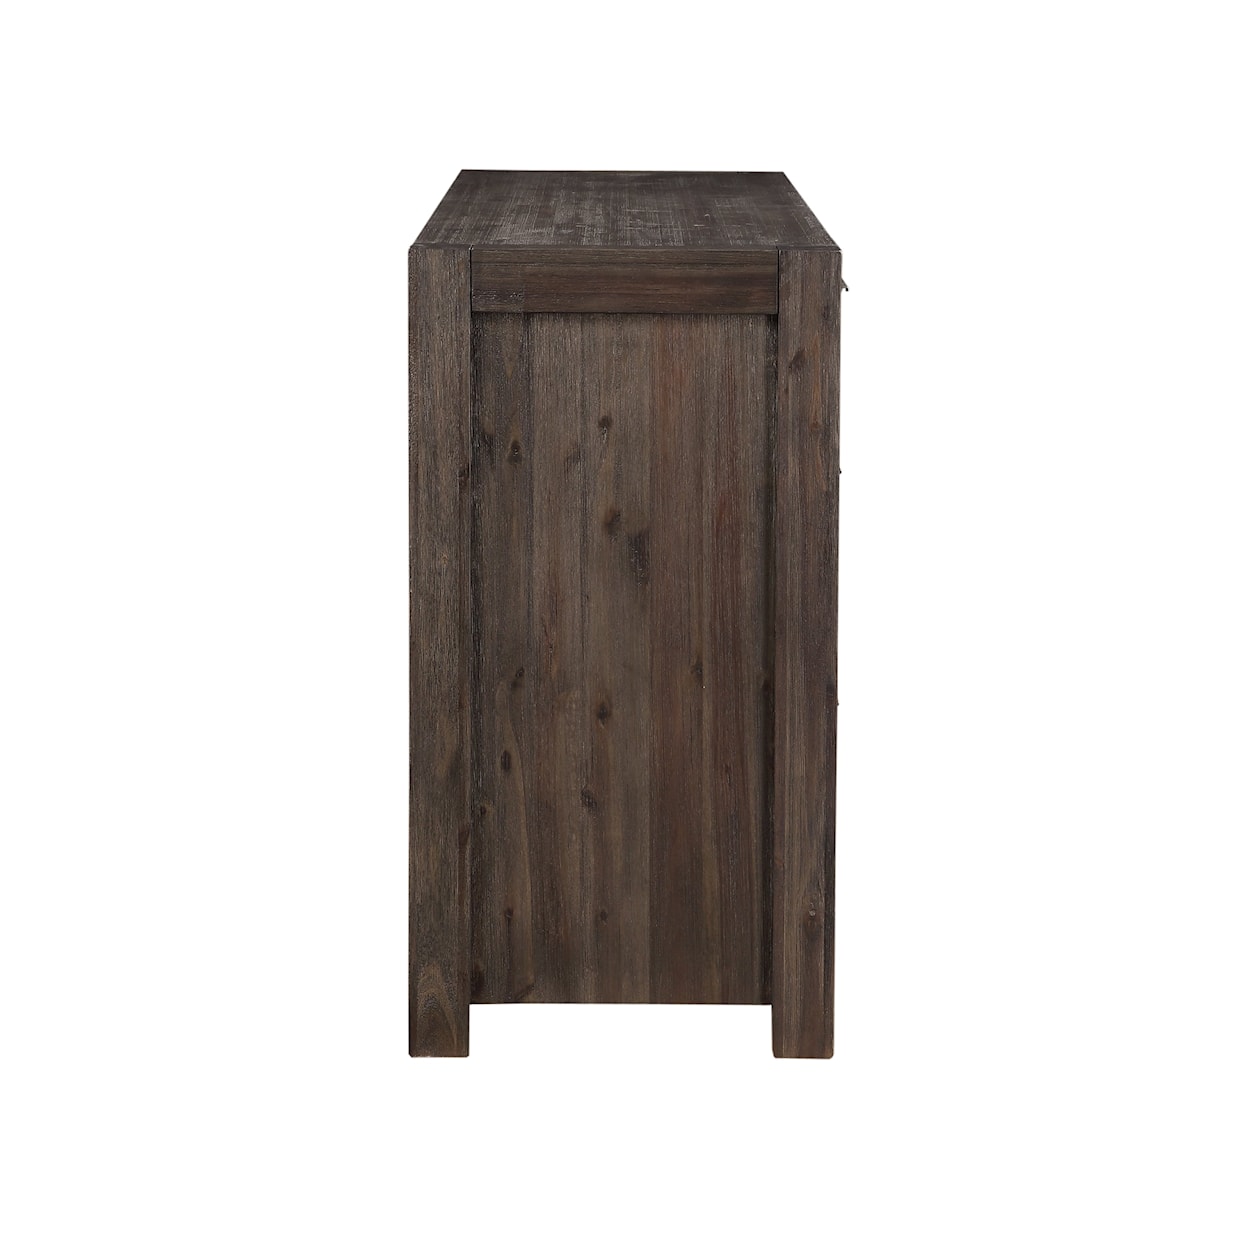 Modus International Savanna Solid Wood Dresser